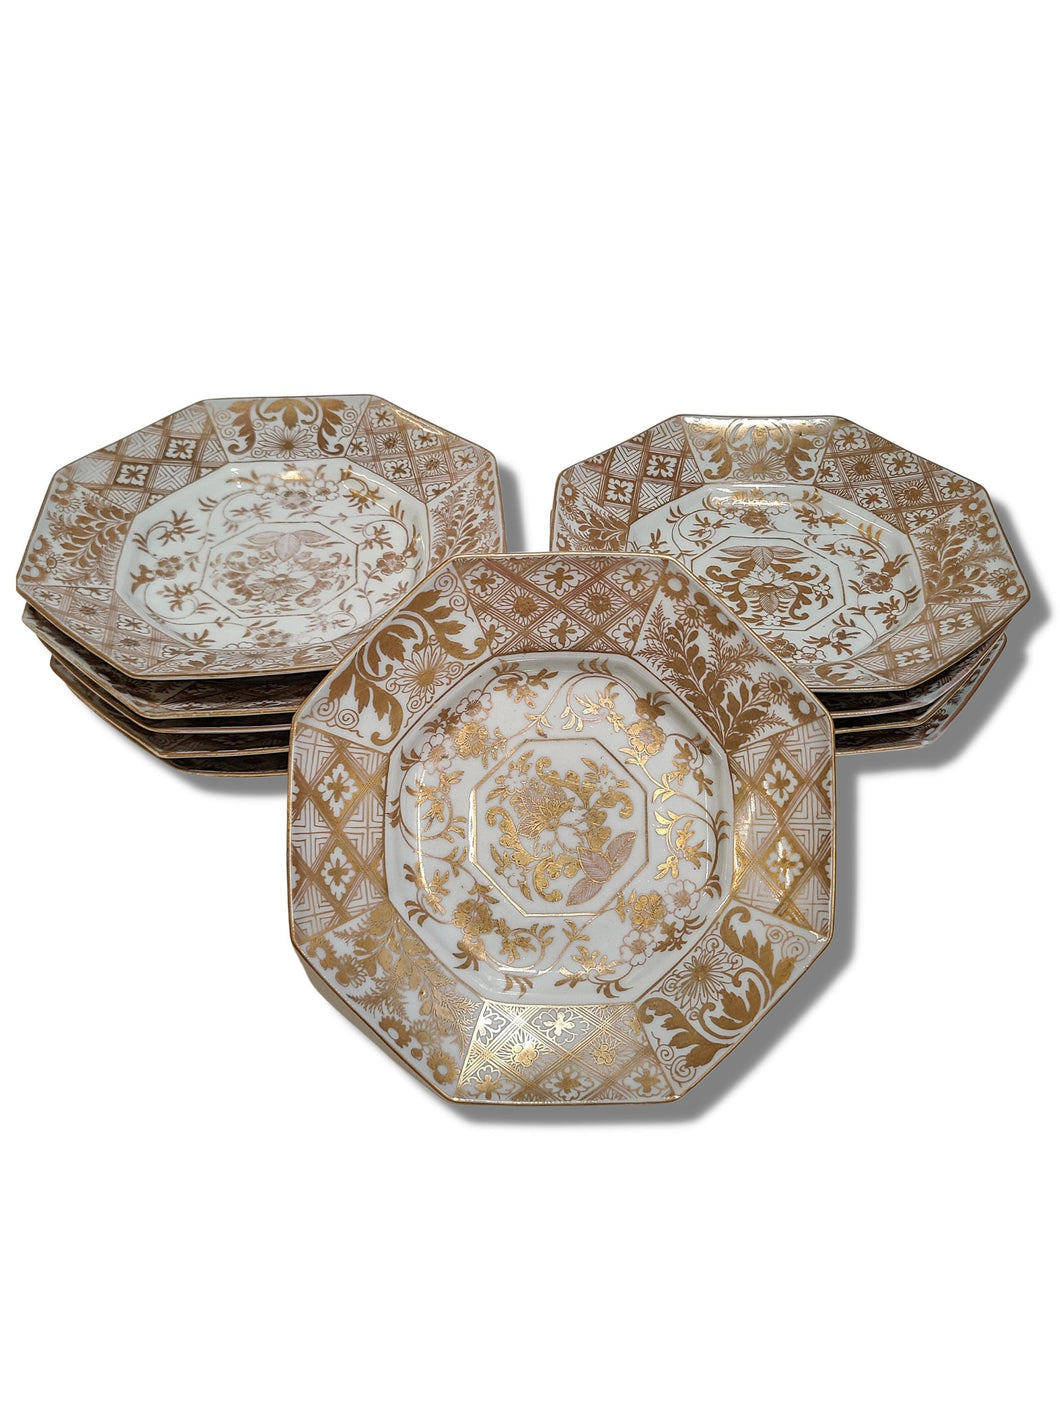 Antique Dessert Plates with Gold Decoration (Set)